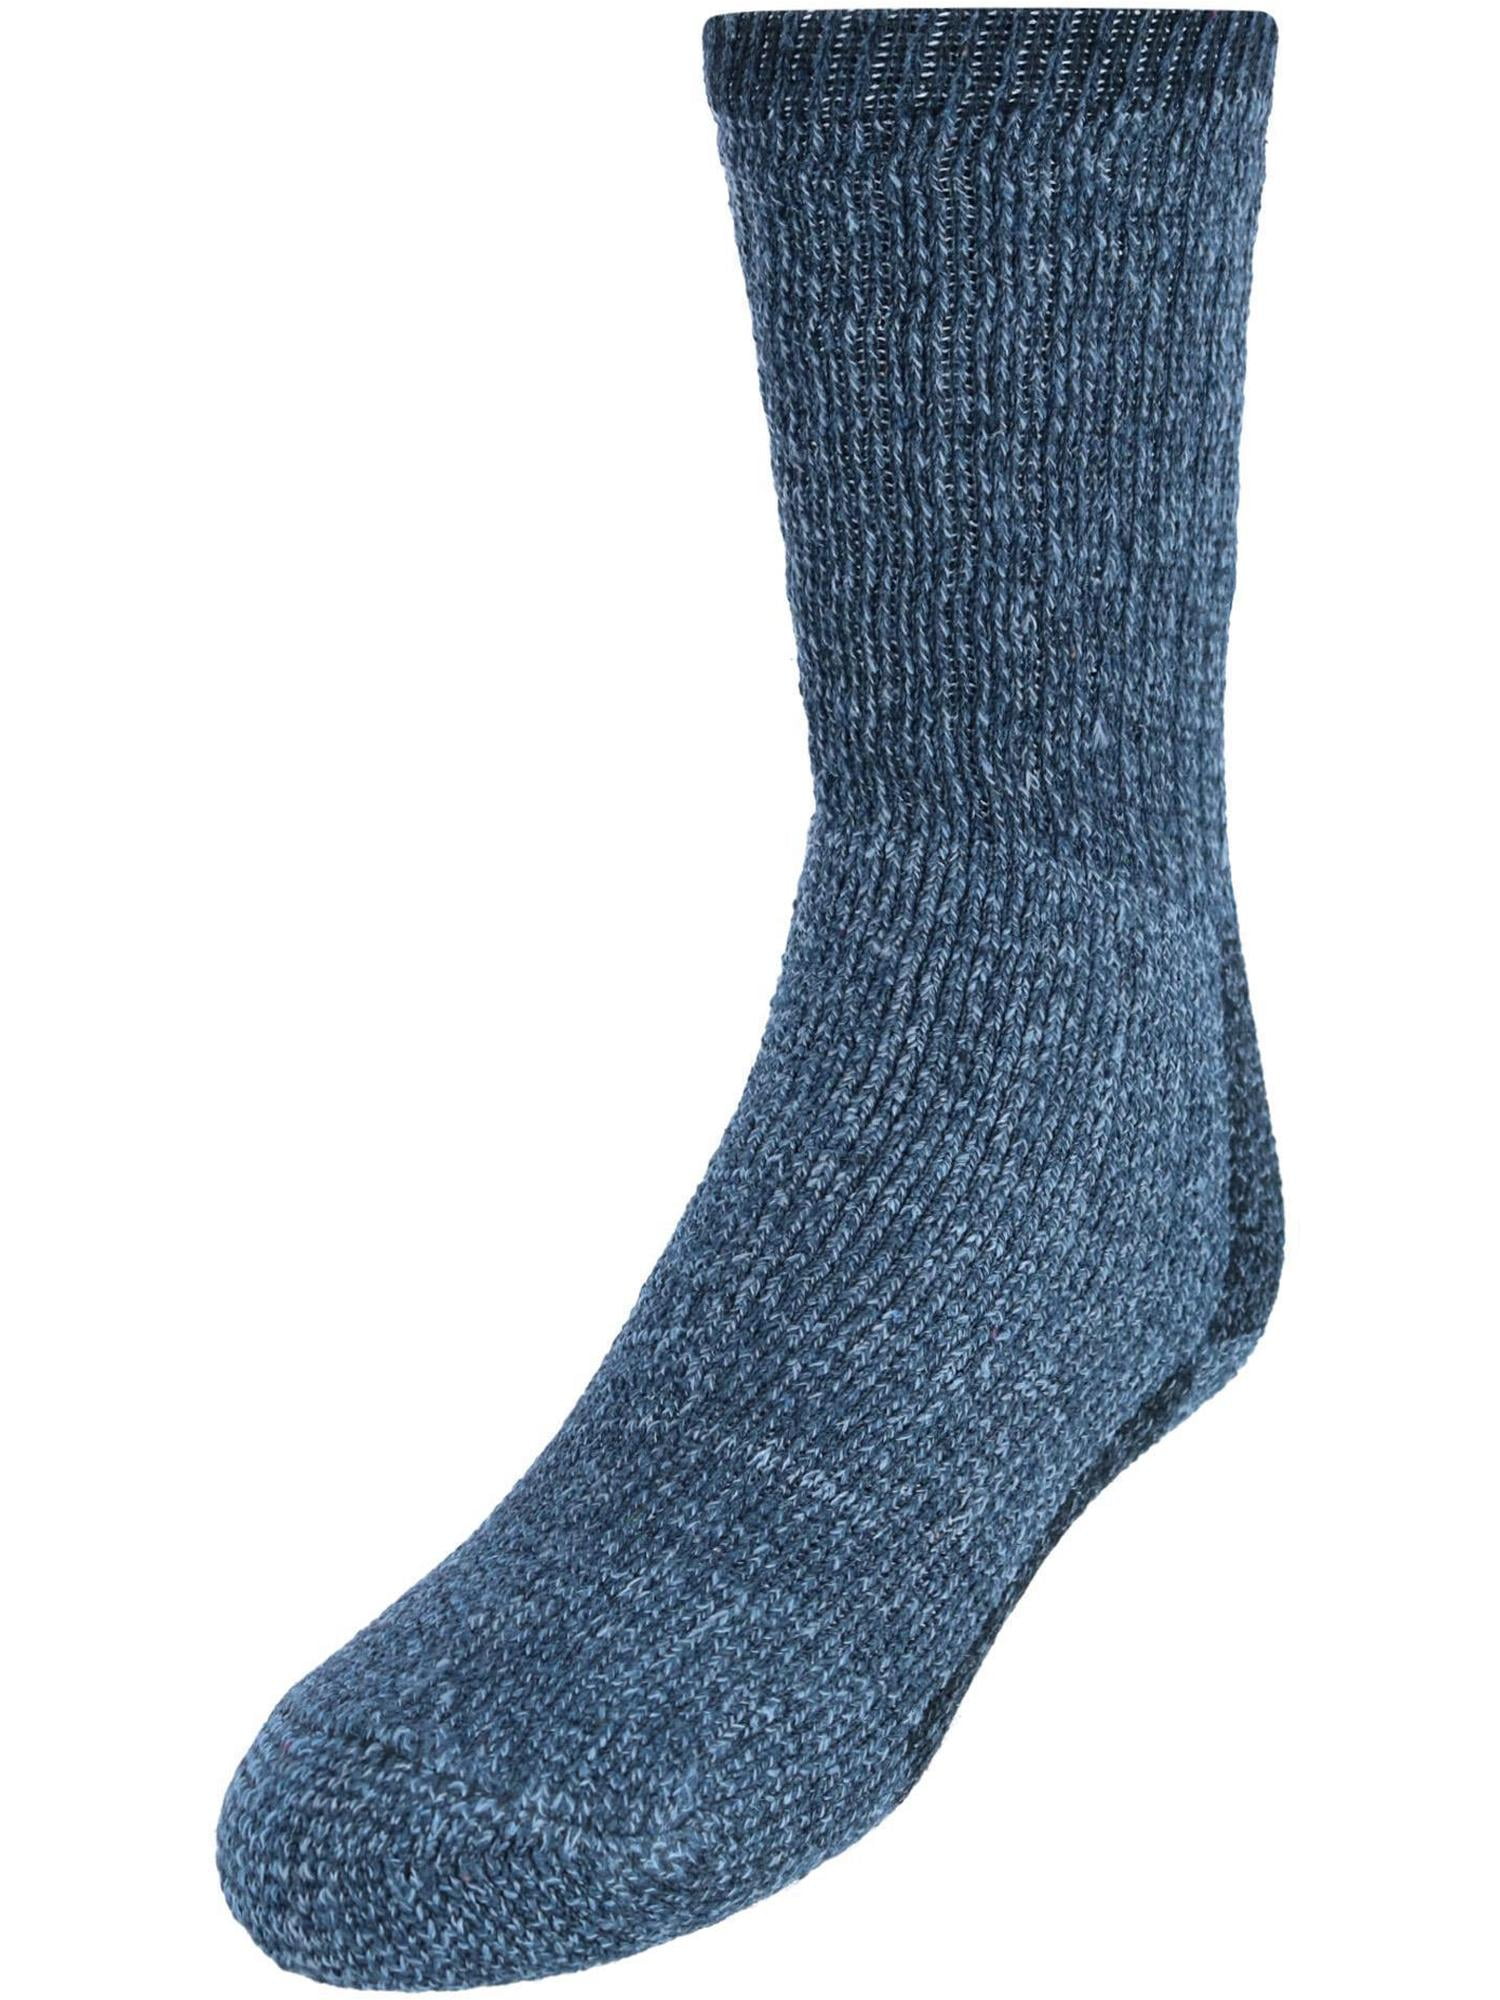 CTM Kid's Wool Blend Crew Socks (2 Pack) - Walmart.com